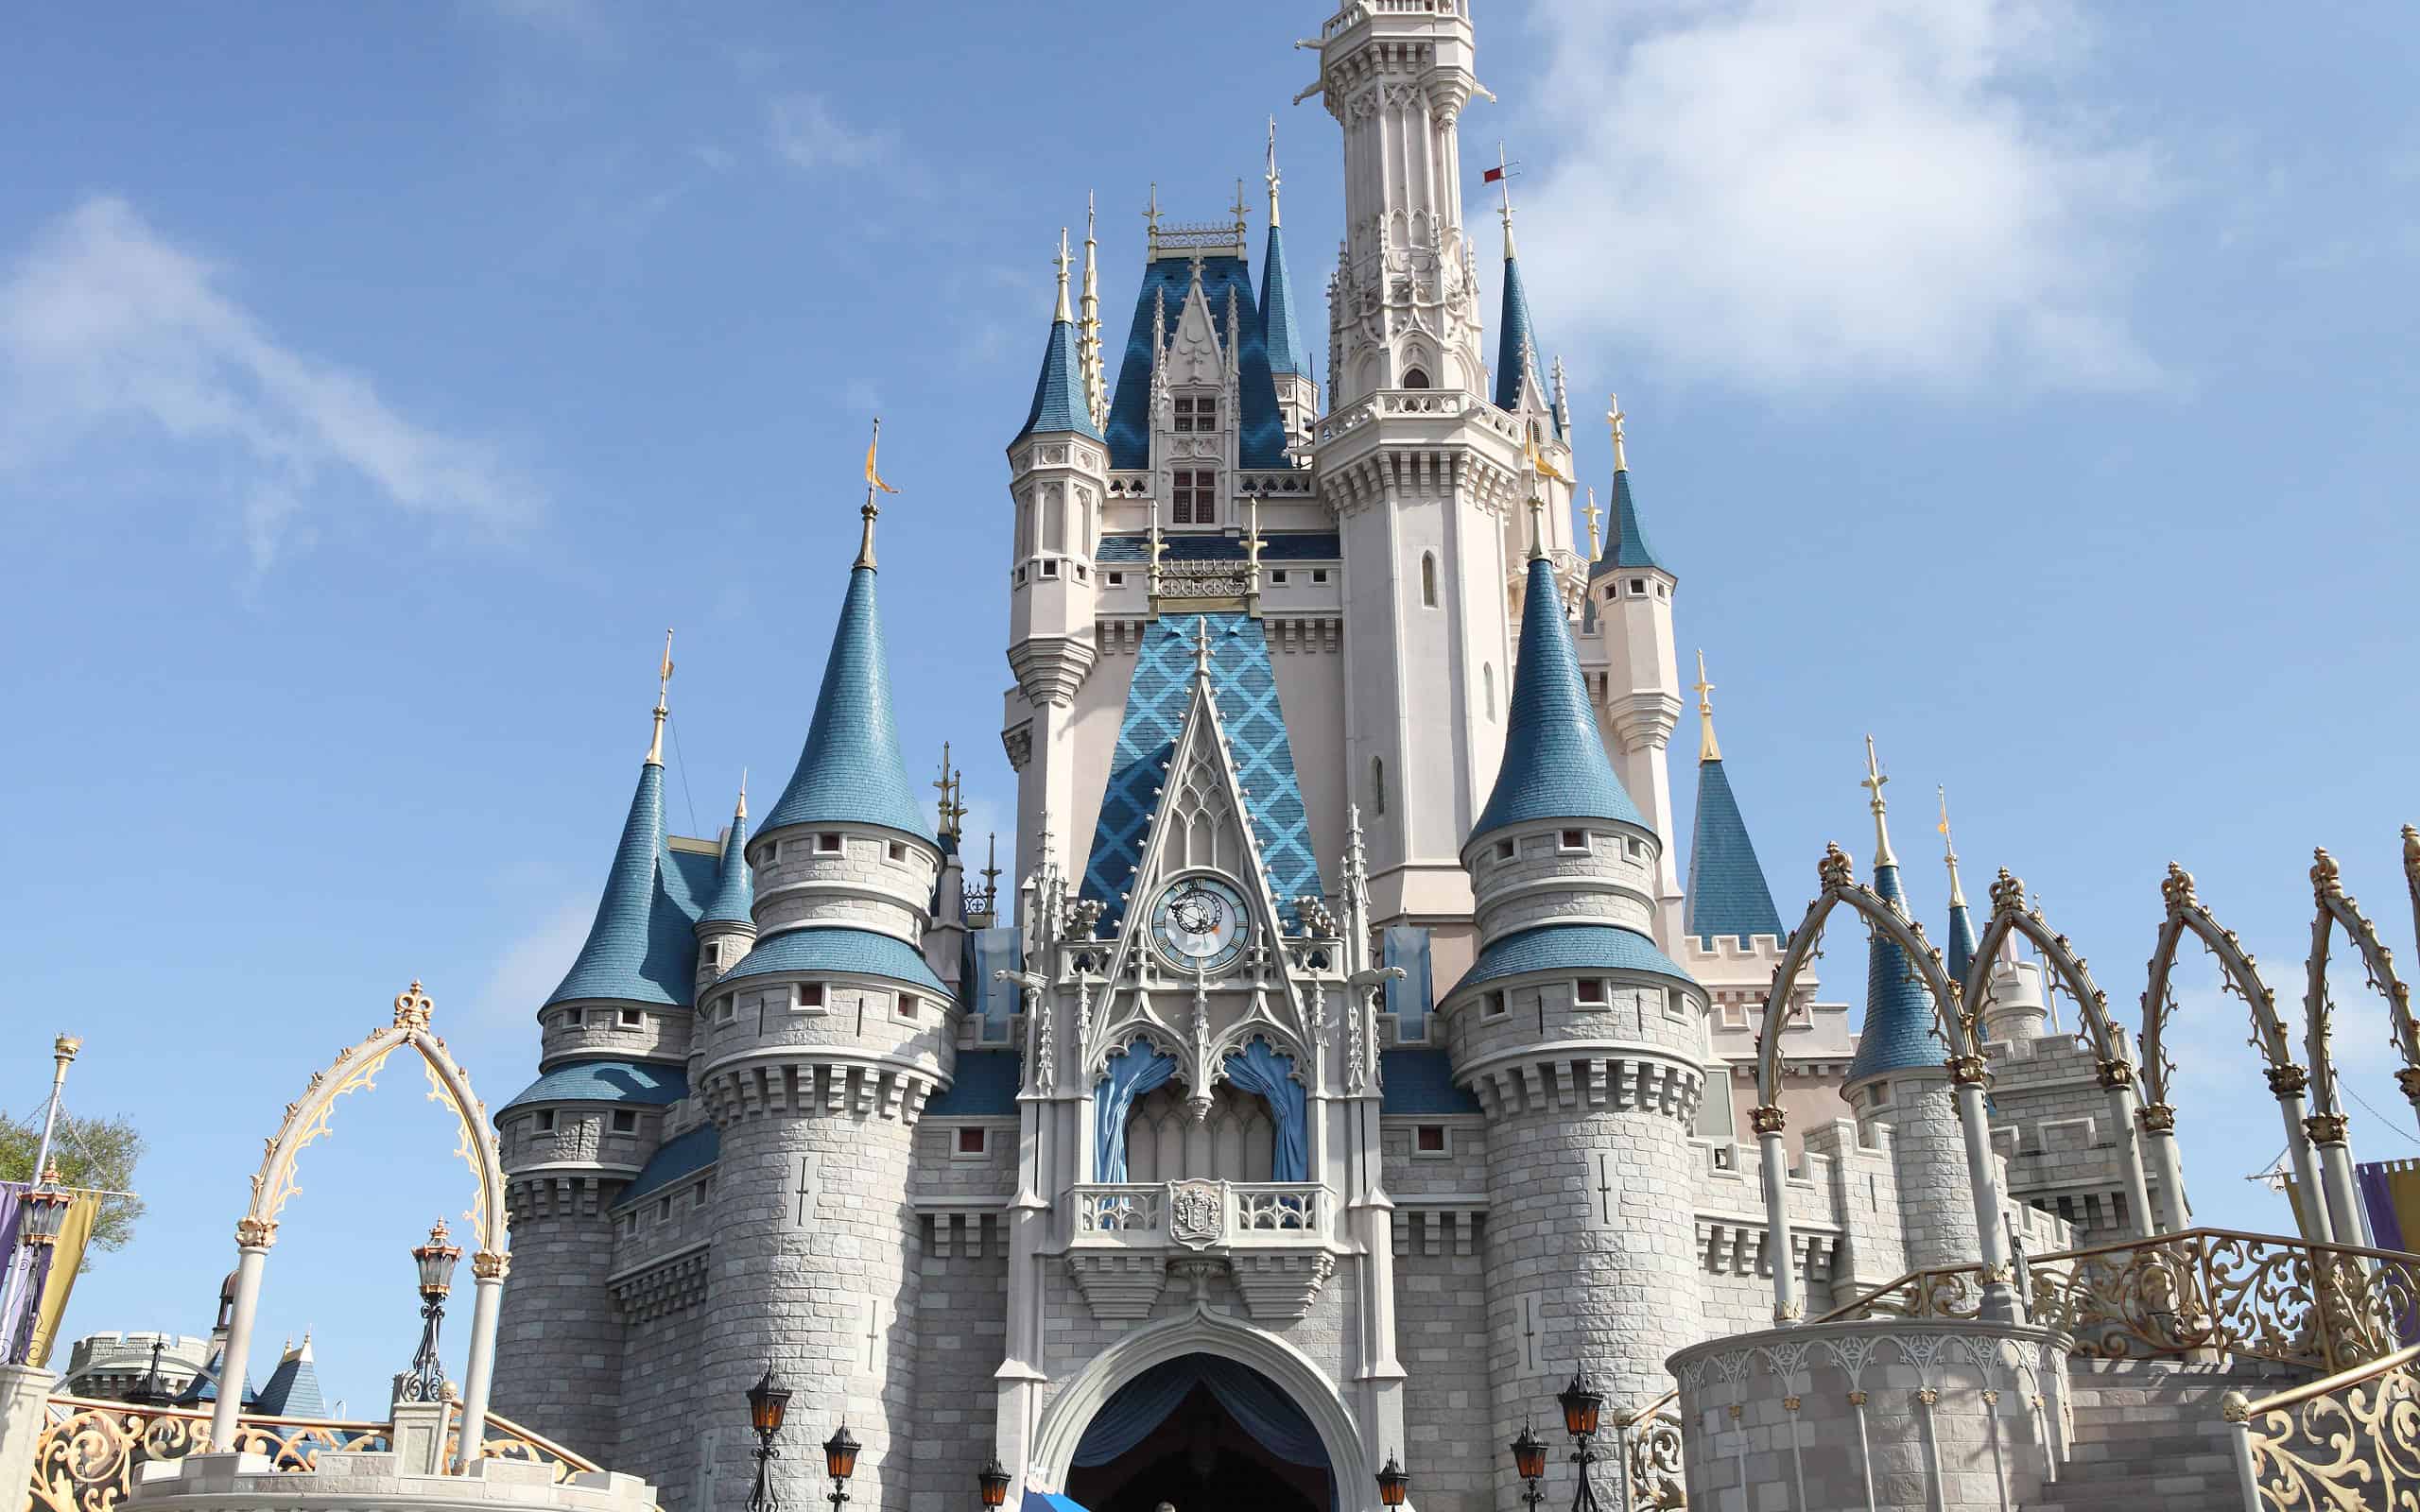 Cinderella's Castle at Walt Disney World in Orlando